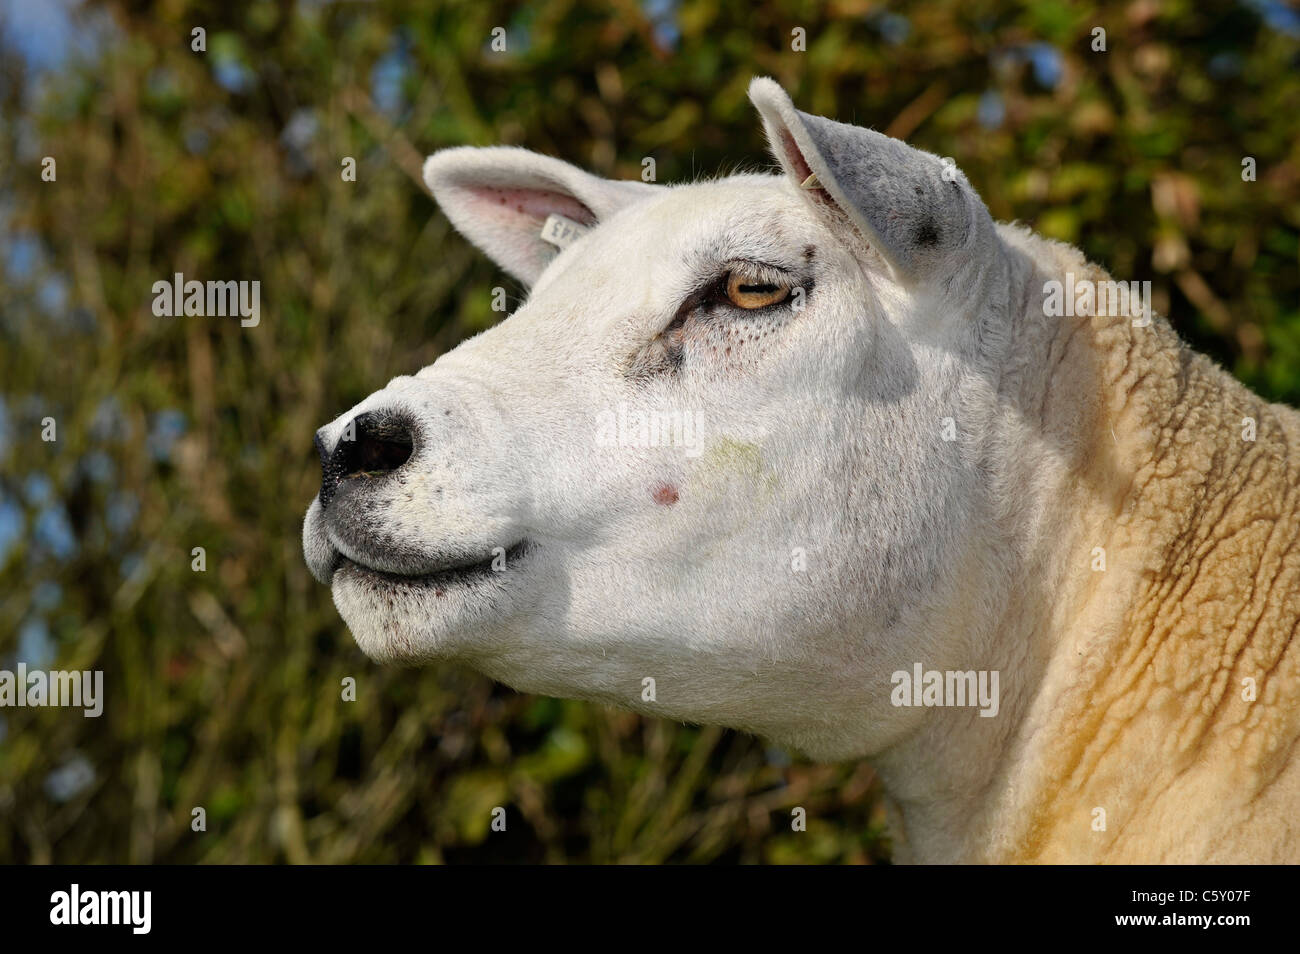 Texel sheep - close up of head. Stock Photo